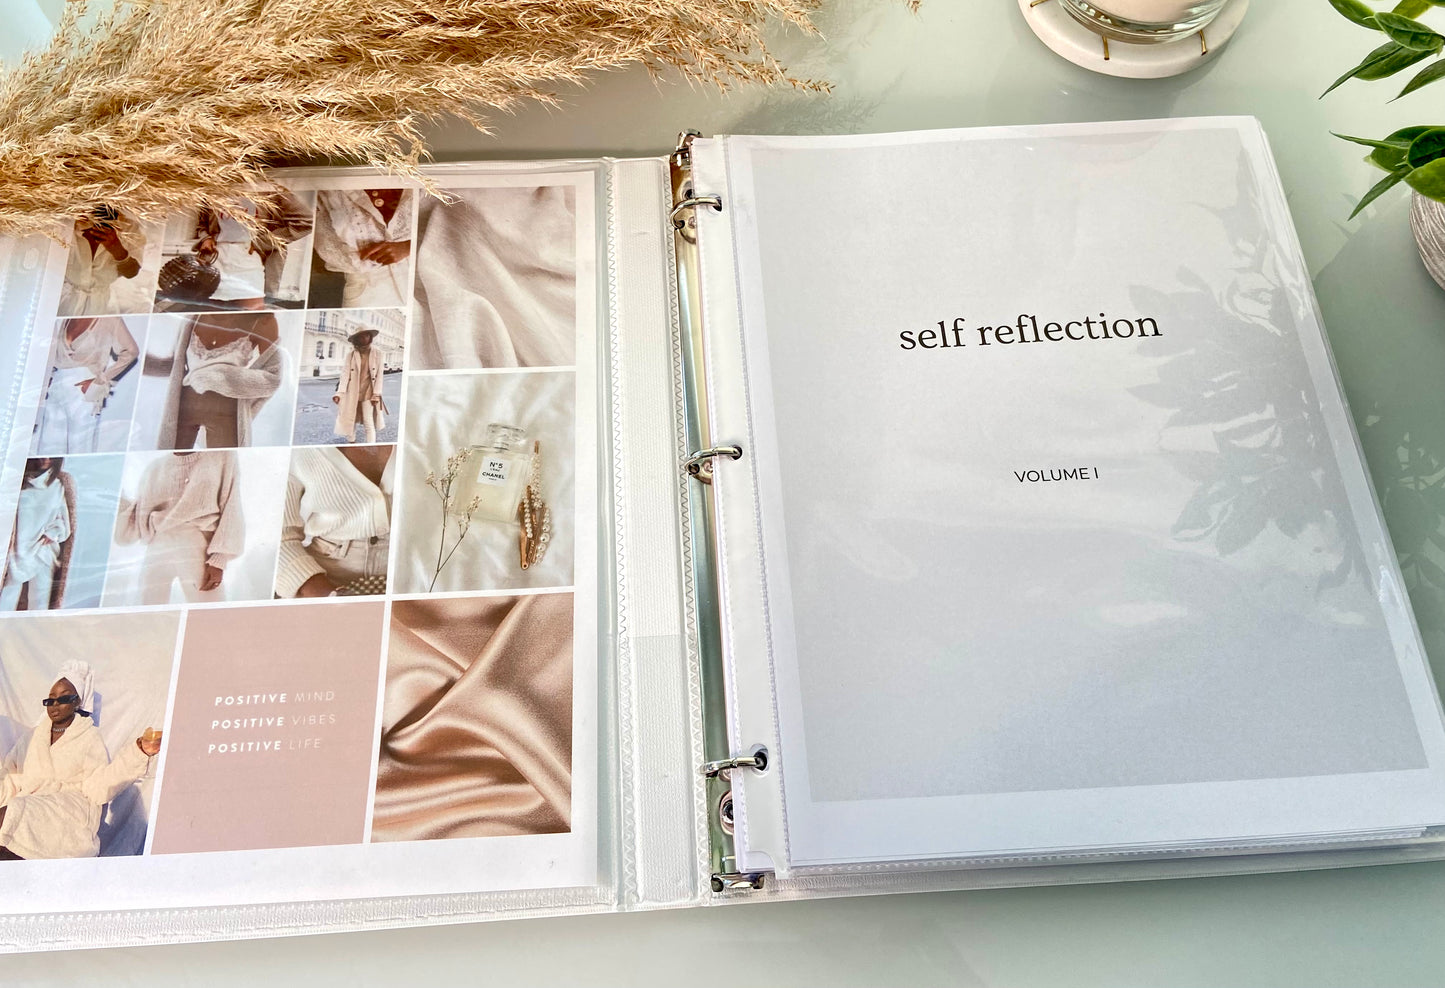 Self Reflection Journal